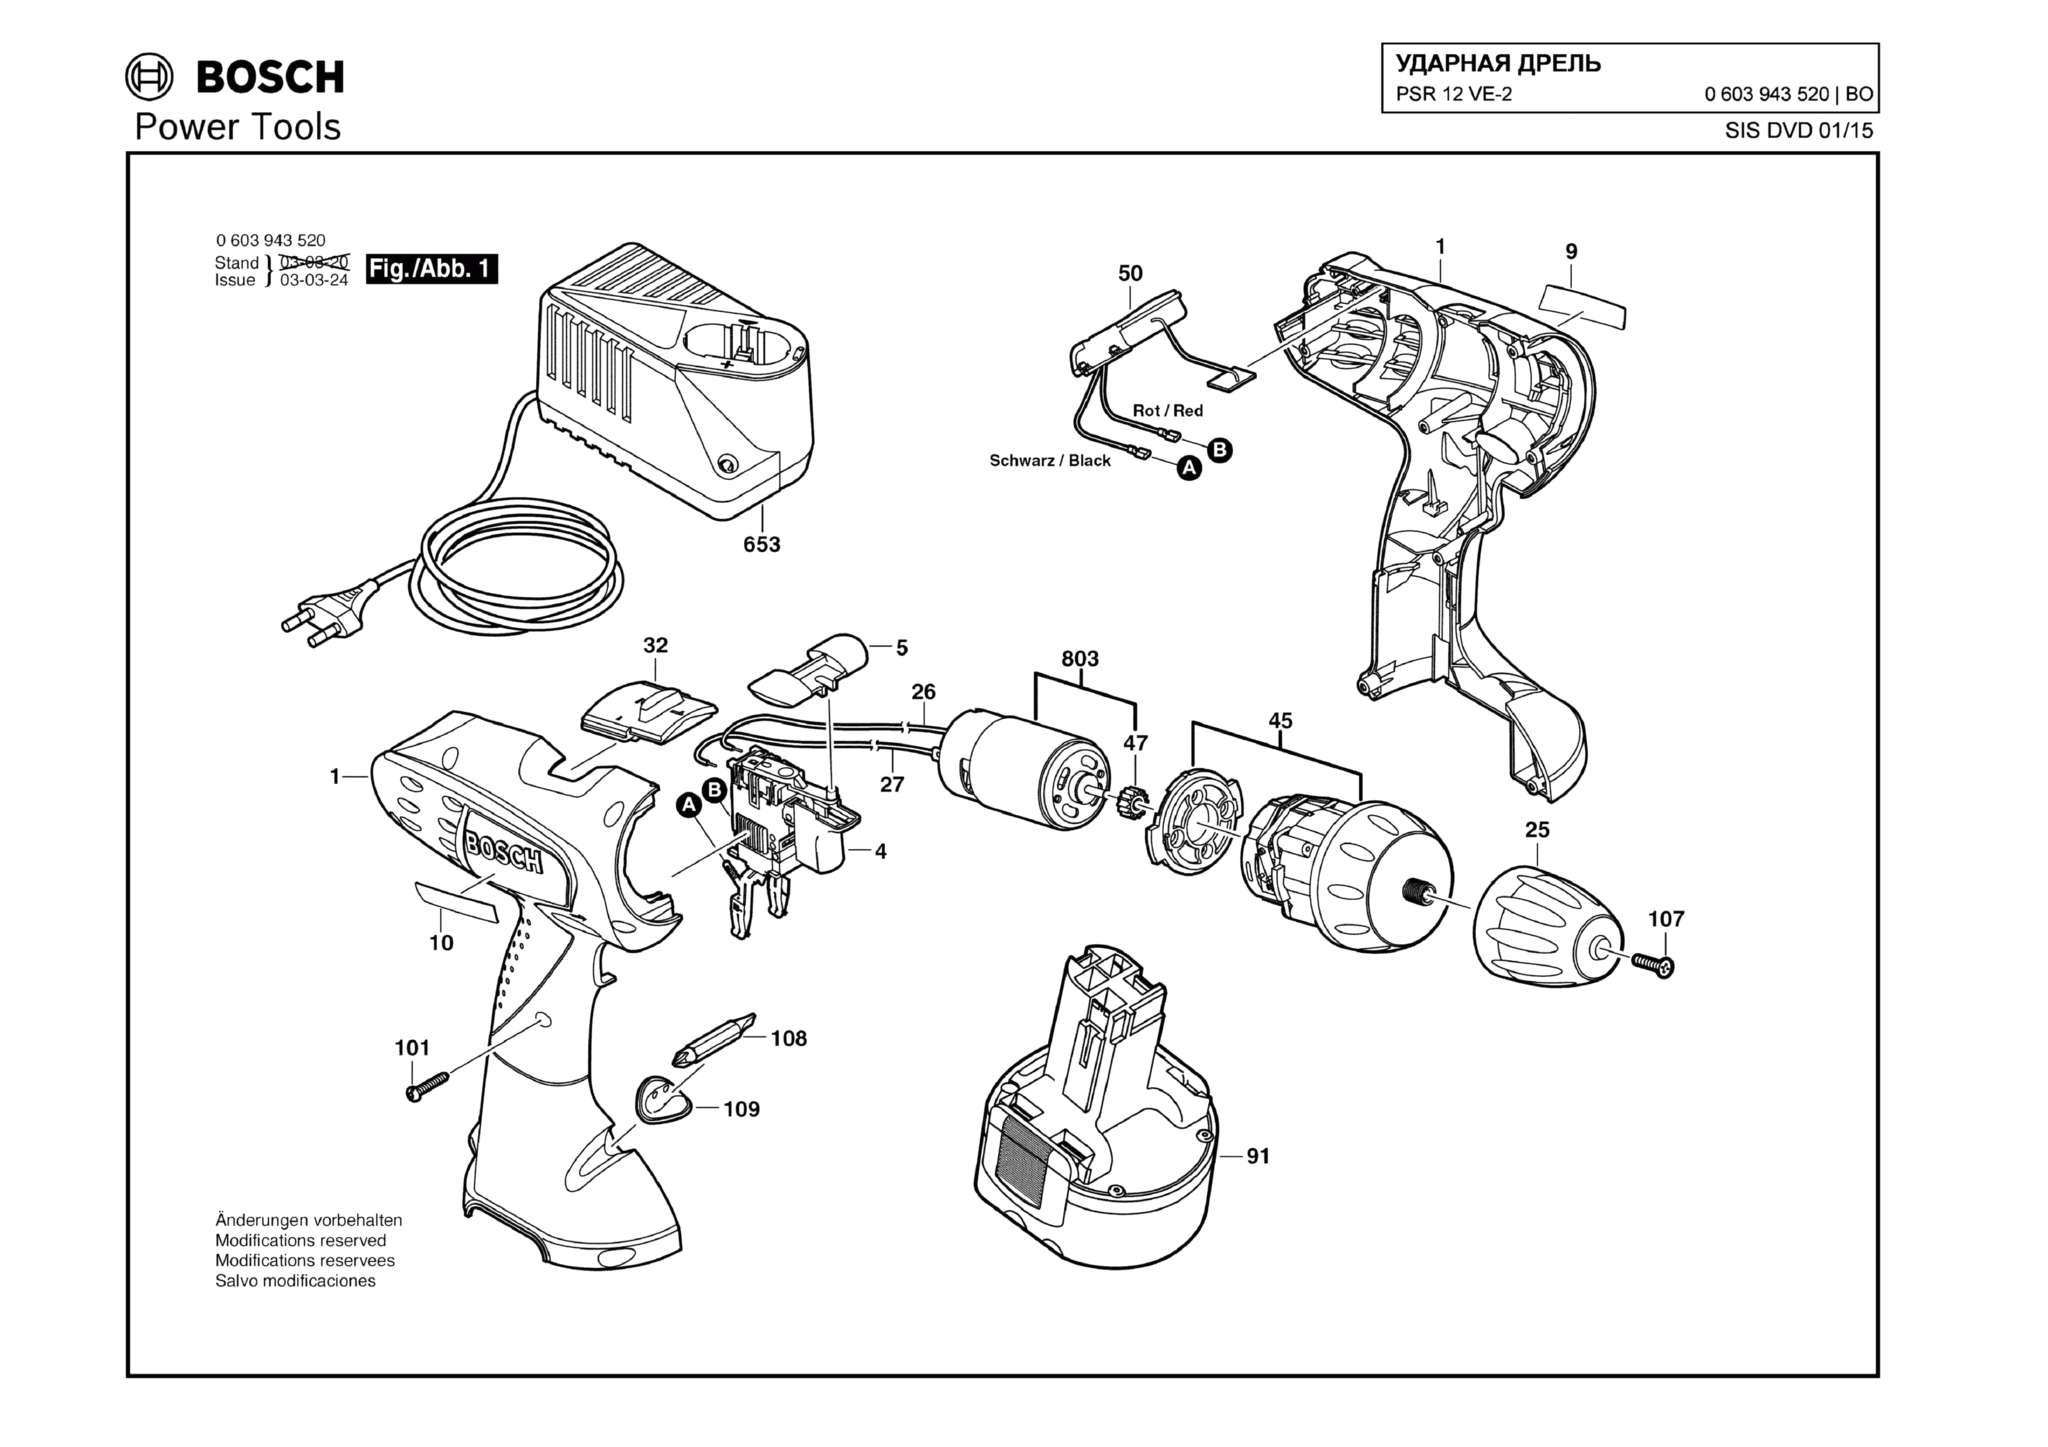 Запчасти, схема и деталировка Bosch PSR 12 VE-2 (ТИП 0603943520)